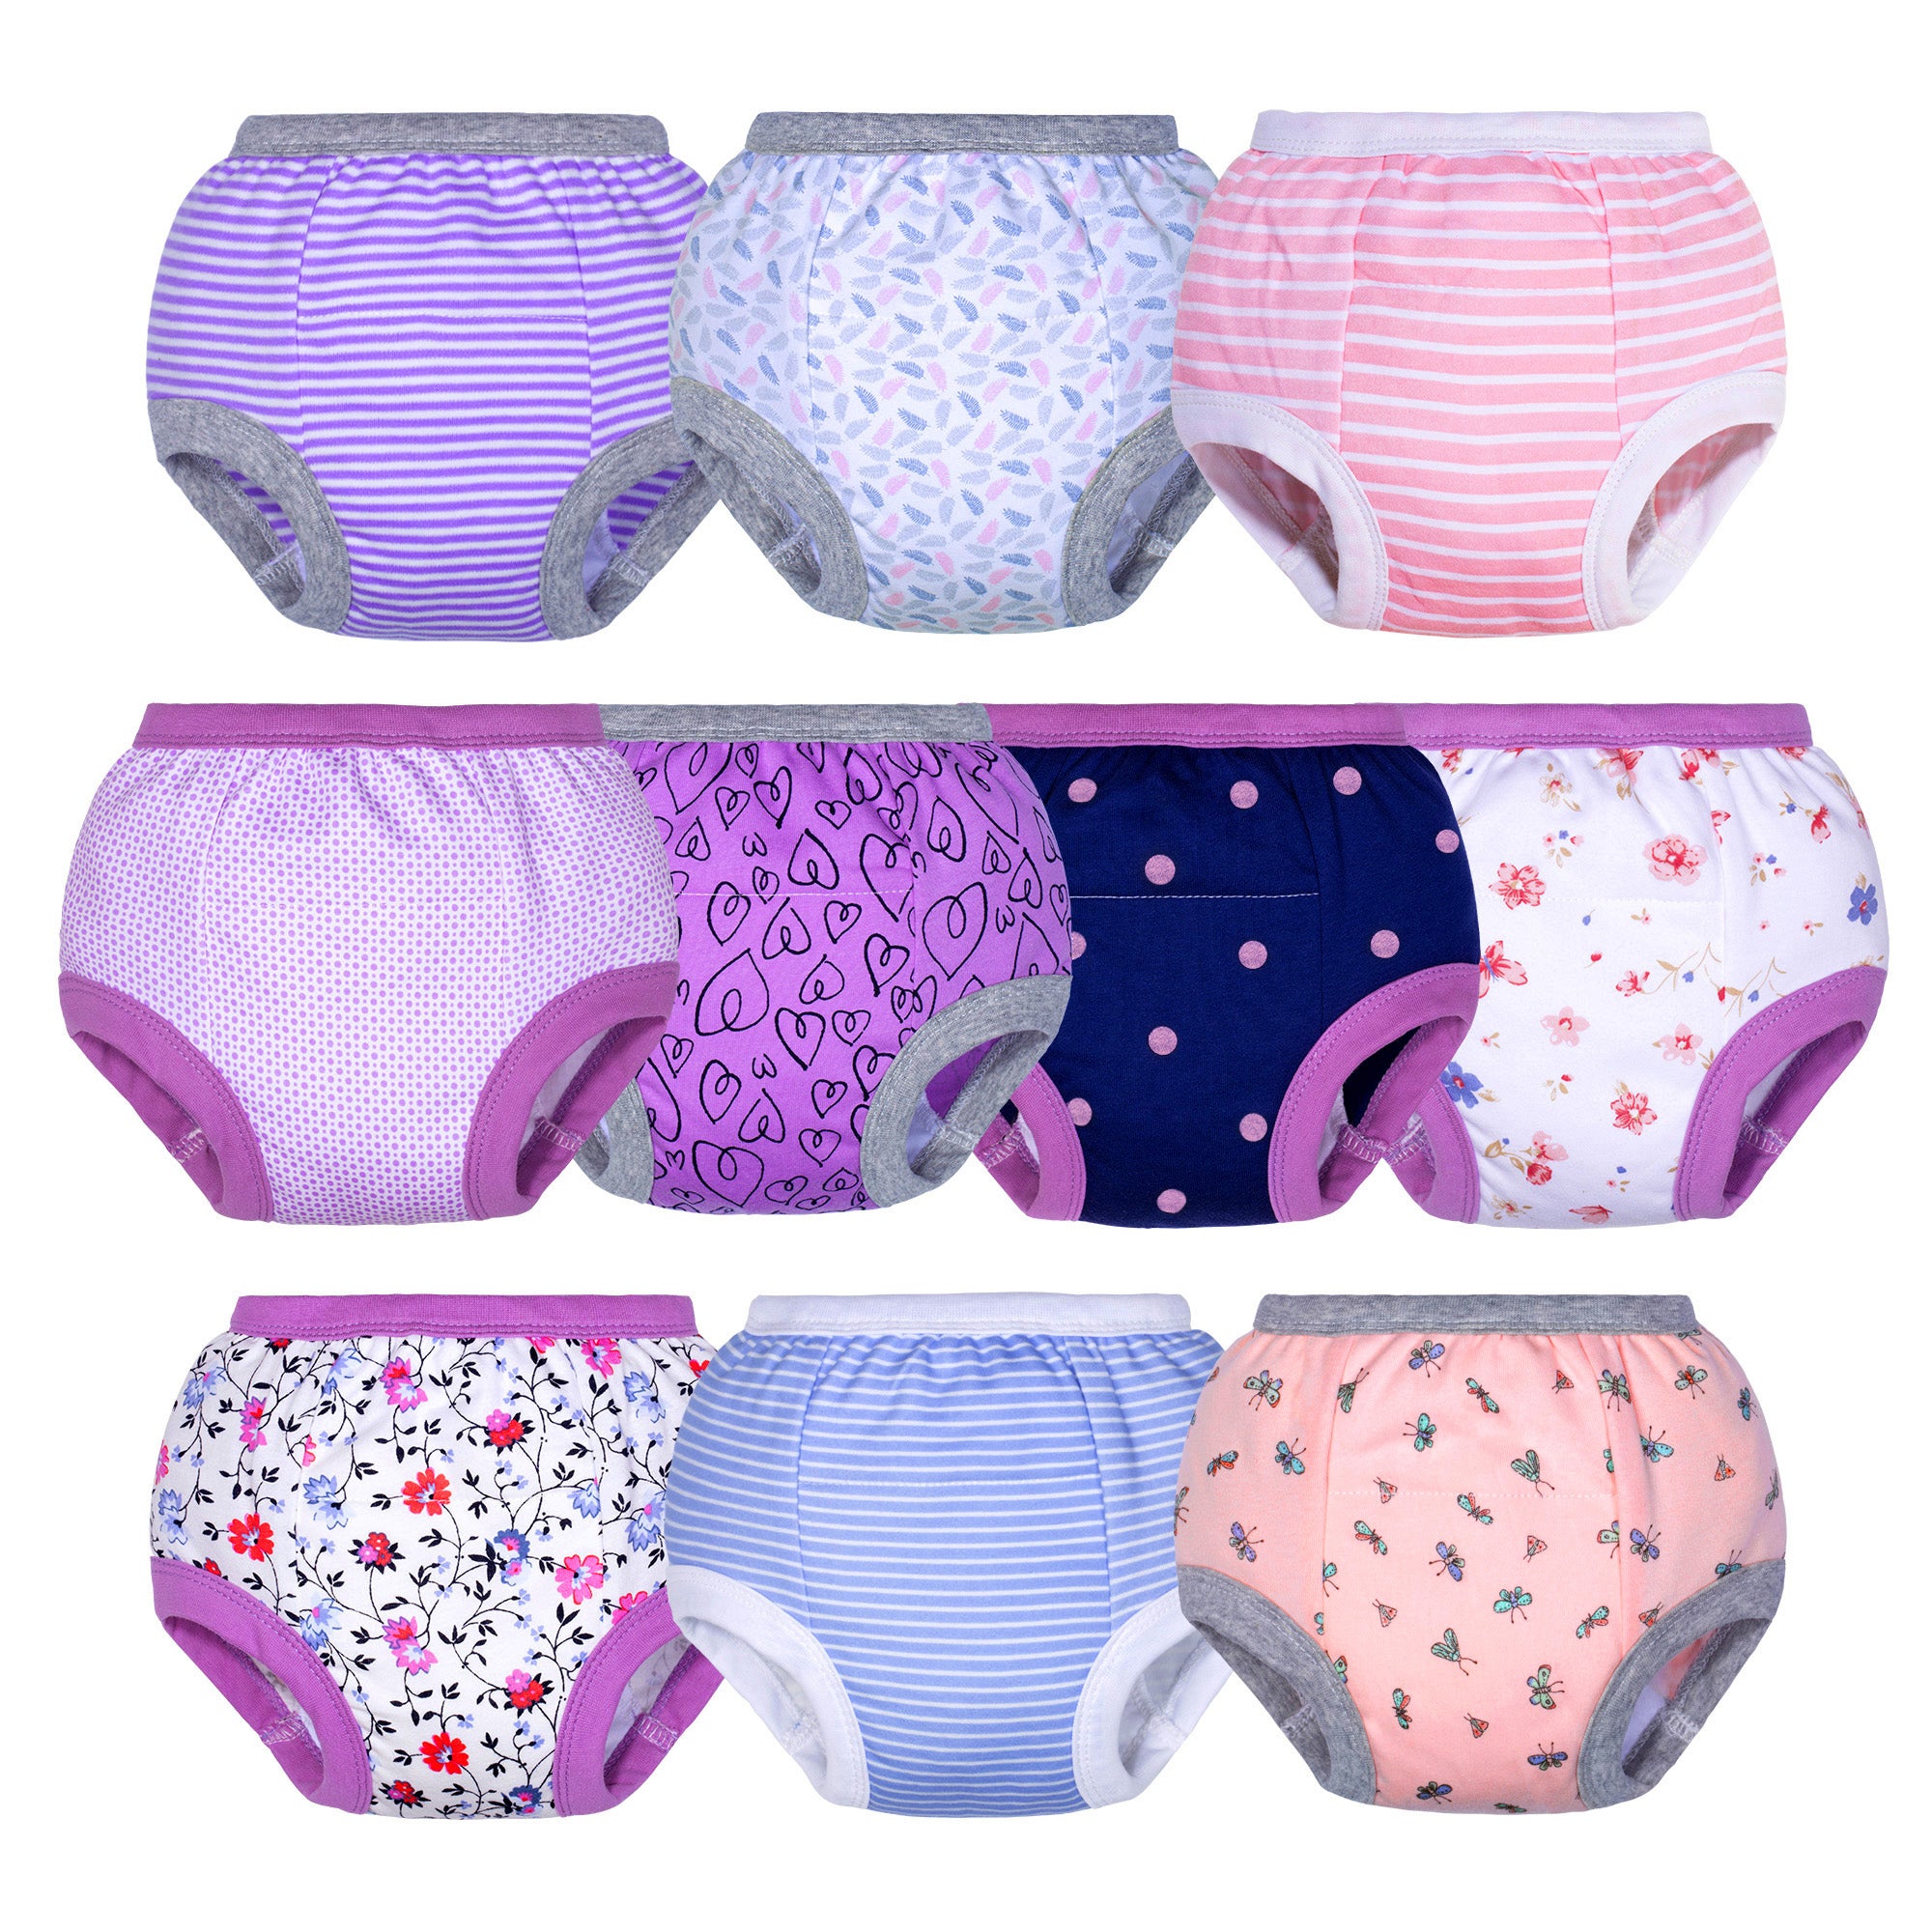 BIG ELEPHANT Toddler Training Underwear, Baby Girls Potty